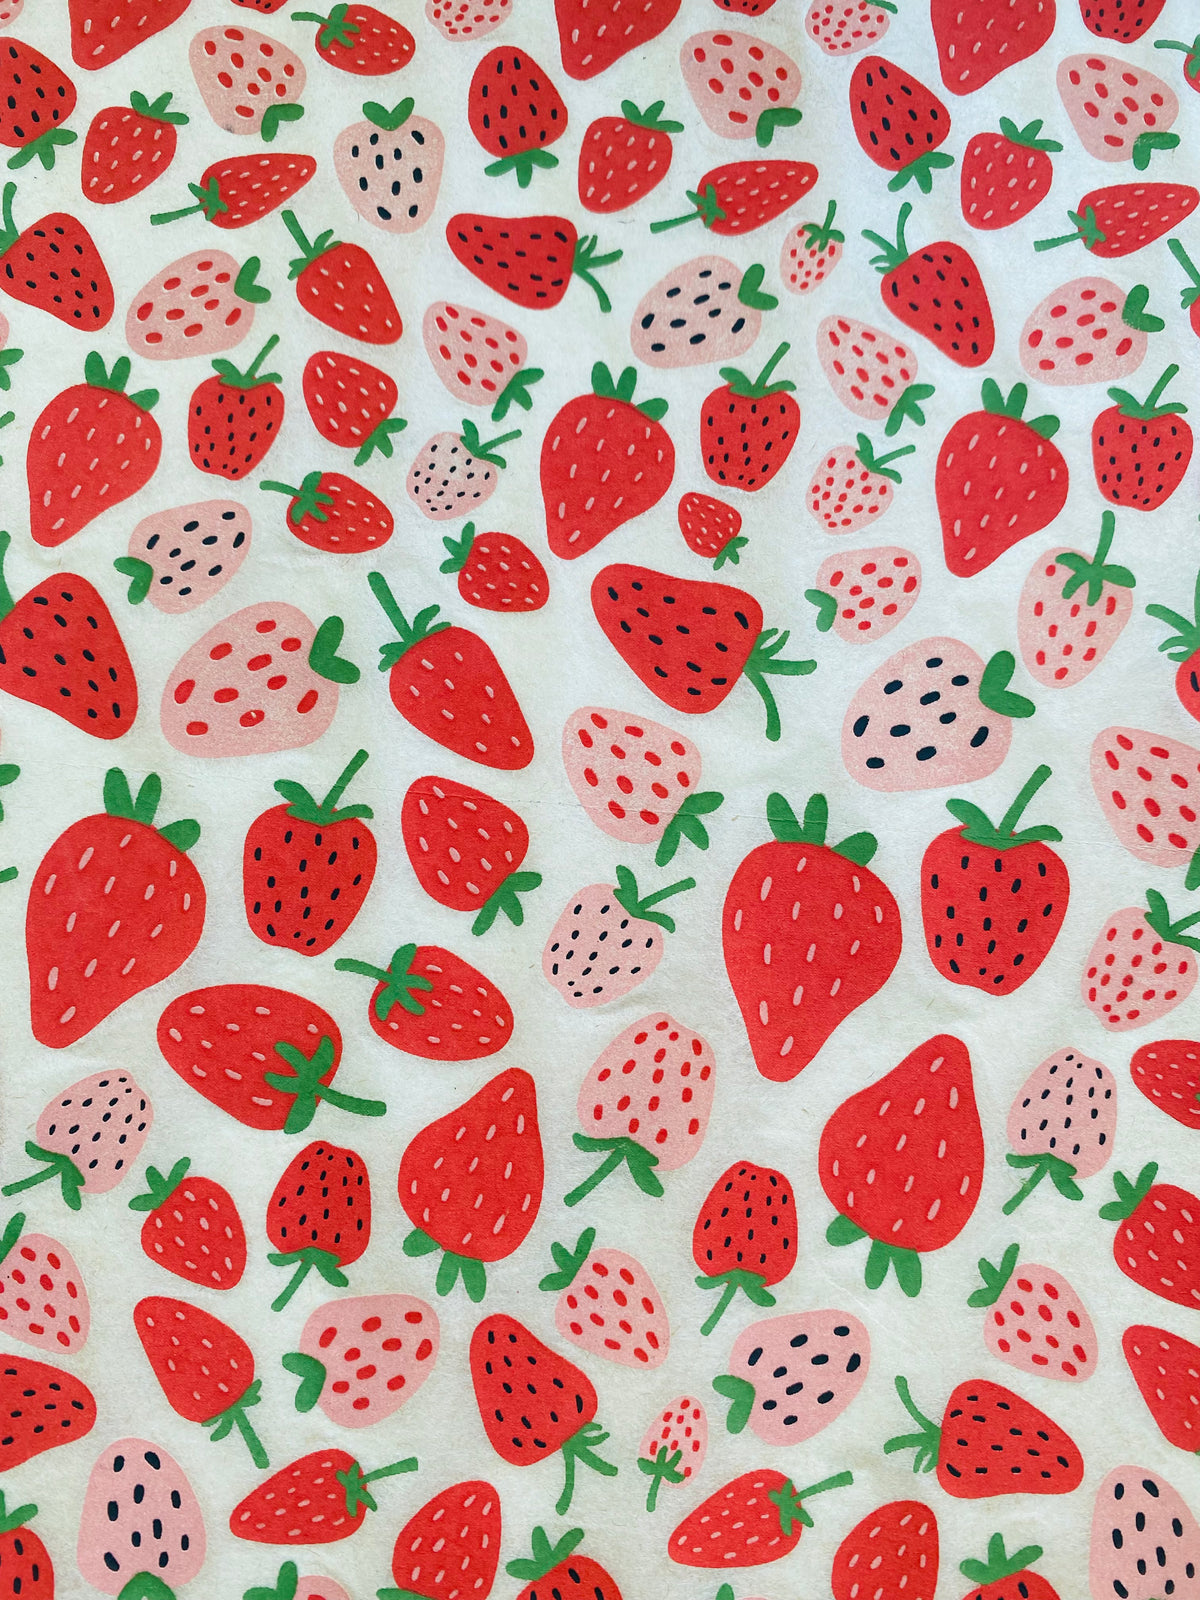 Strawberries - Underglaze Transfer Sheet - Multi Colored